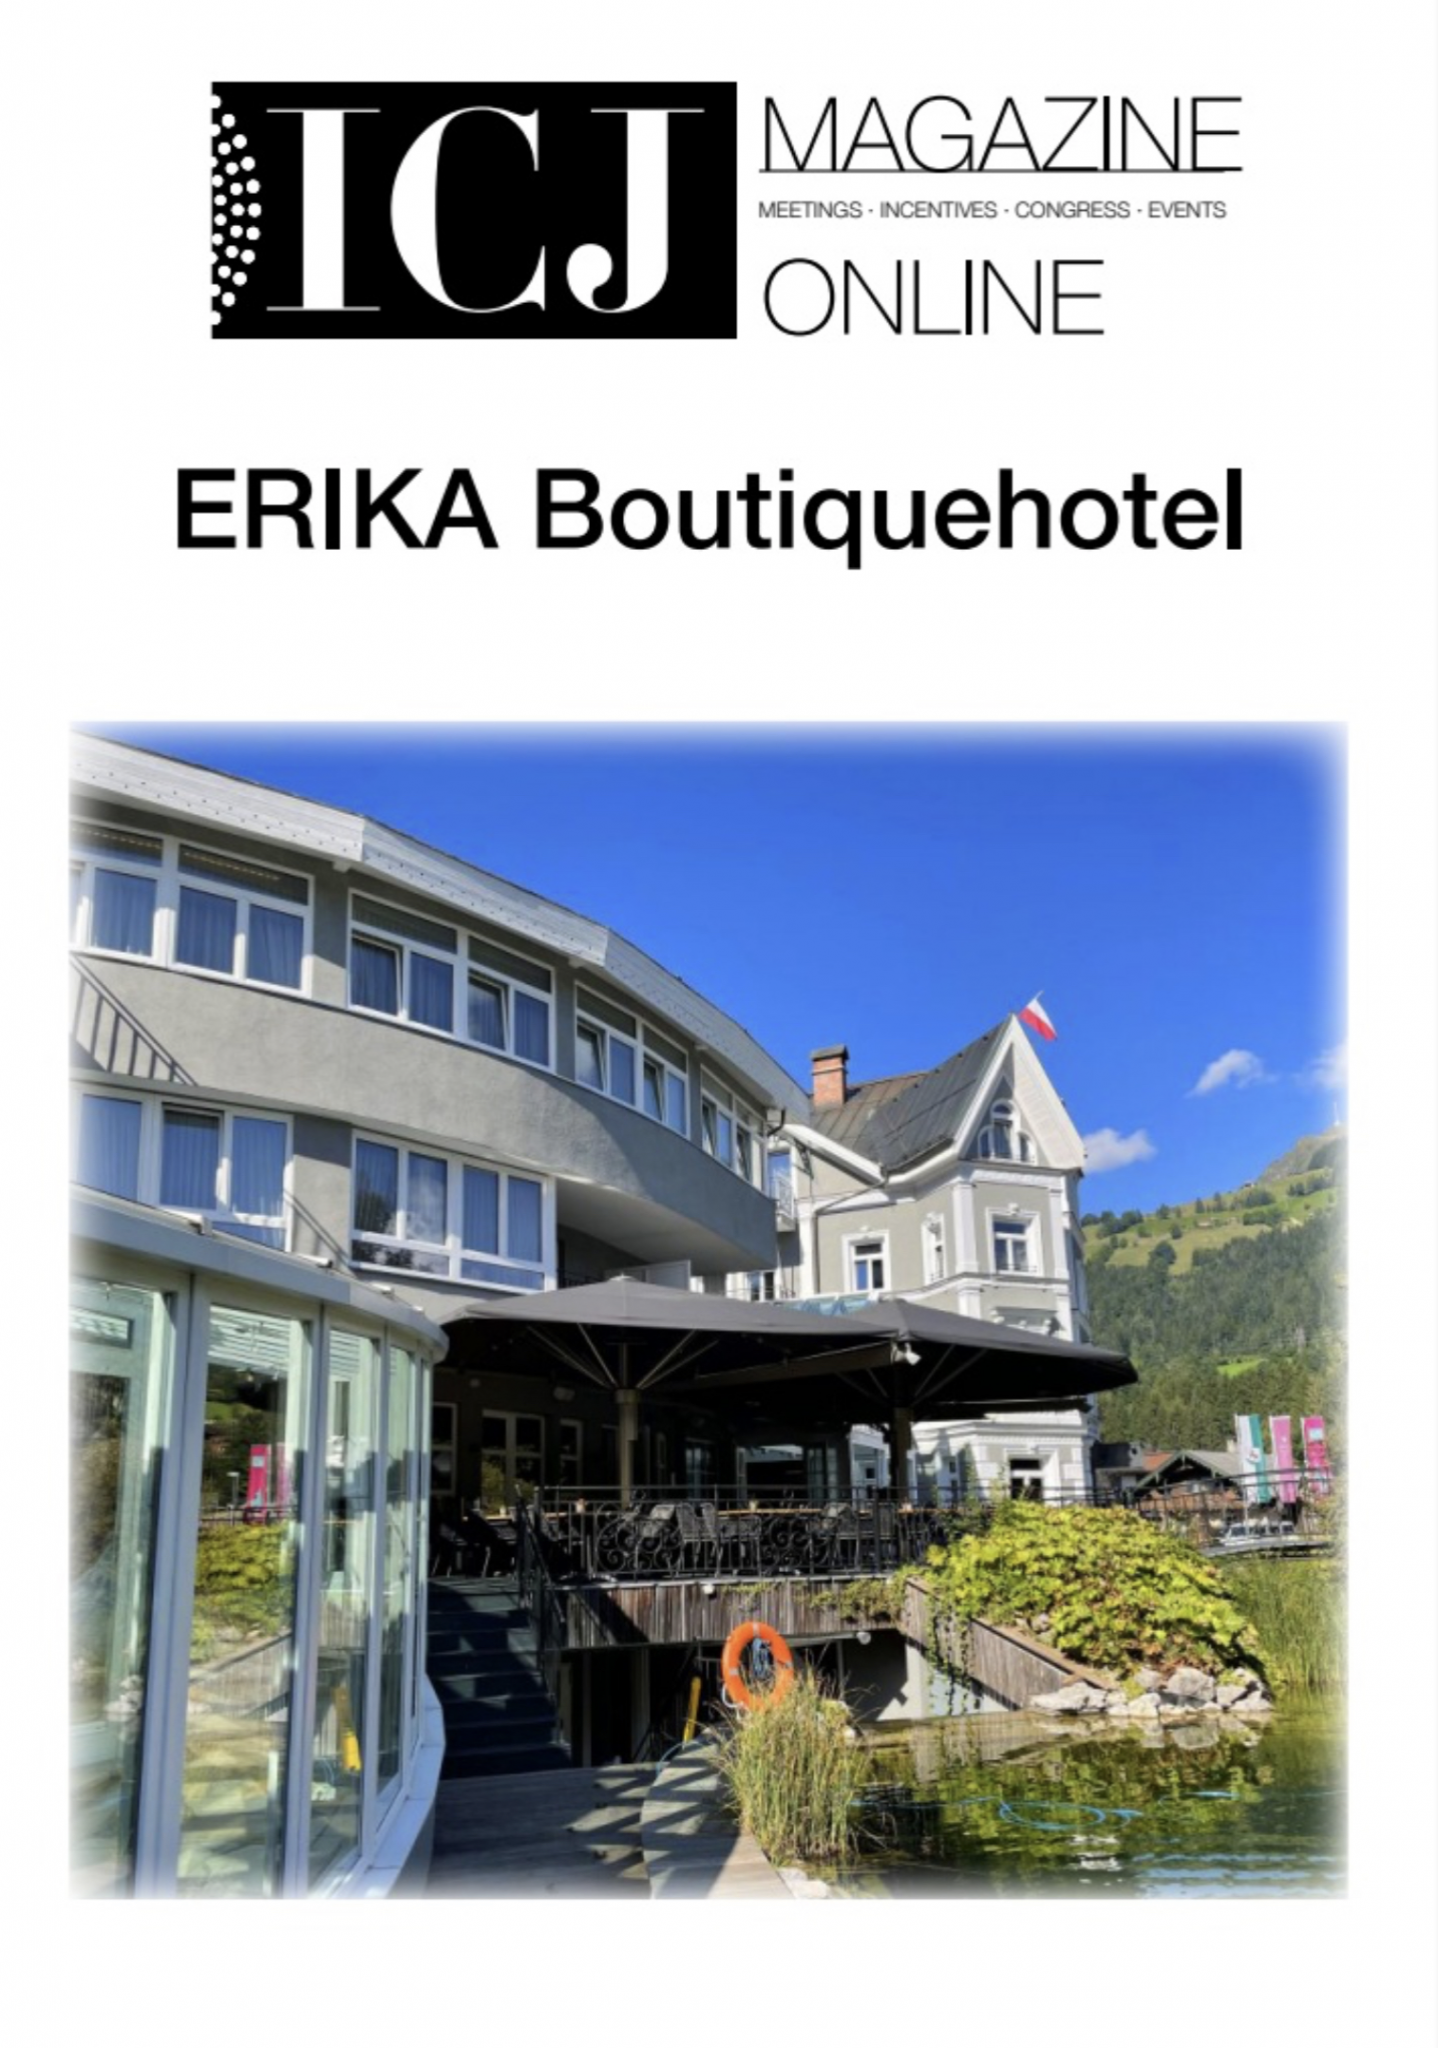 ERIKA Boutiquehotel